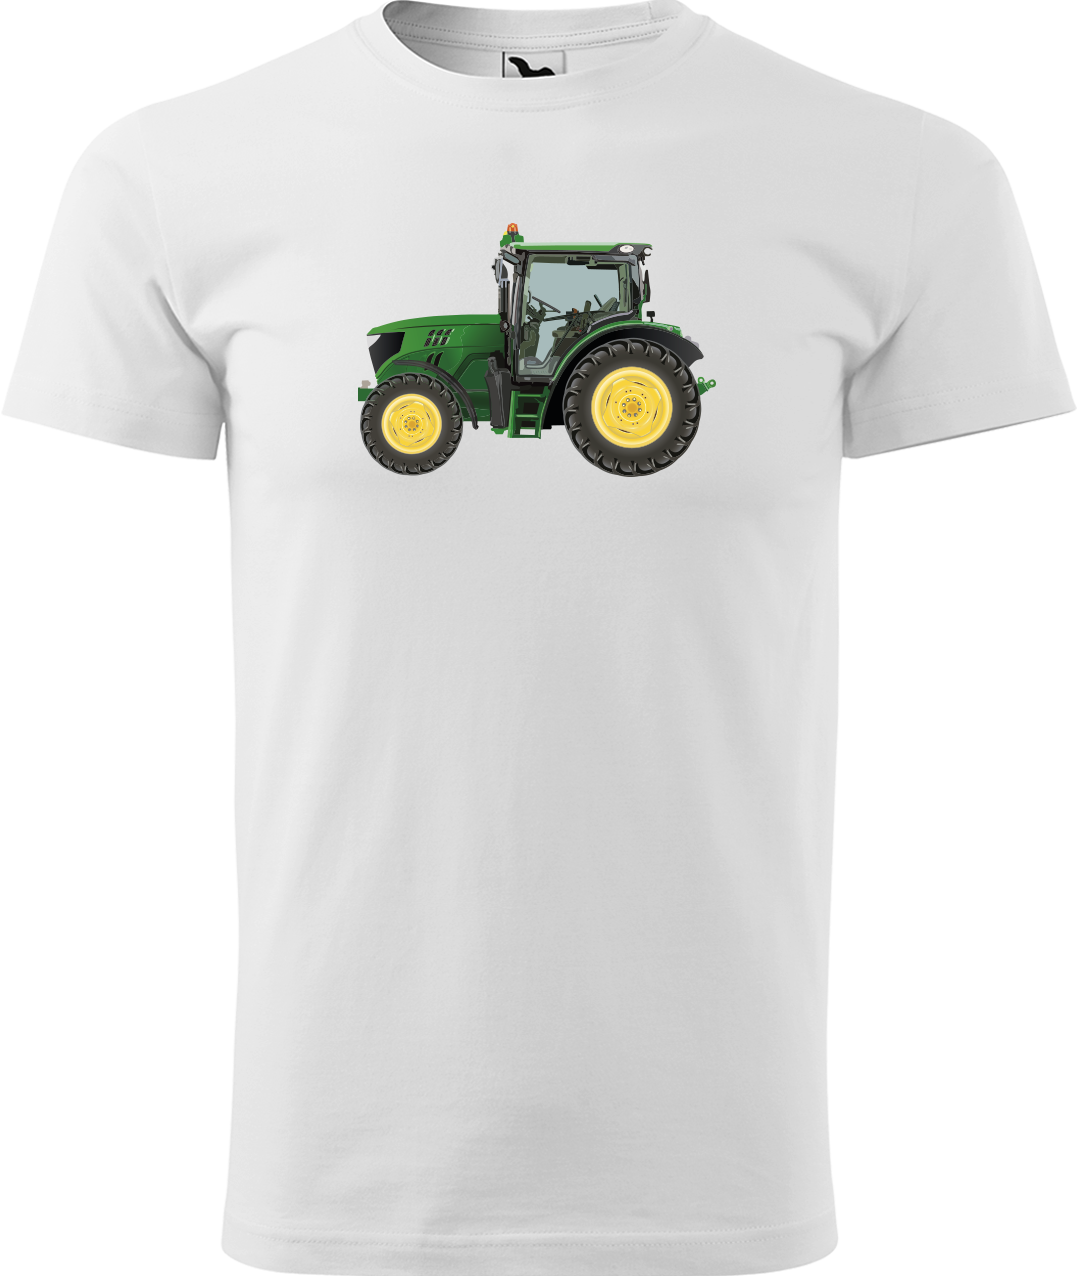 Tričko s traktorem - Zelený traktor Velikost: 2XL, Barva: Bílá (00)